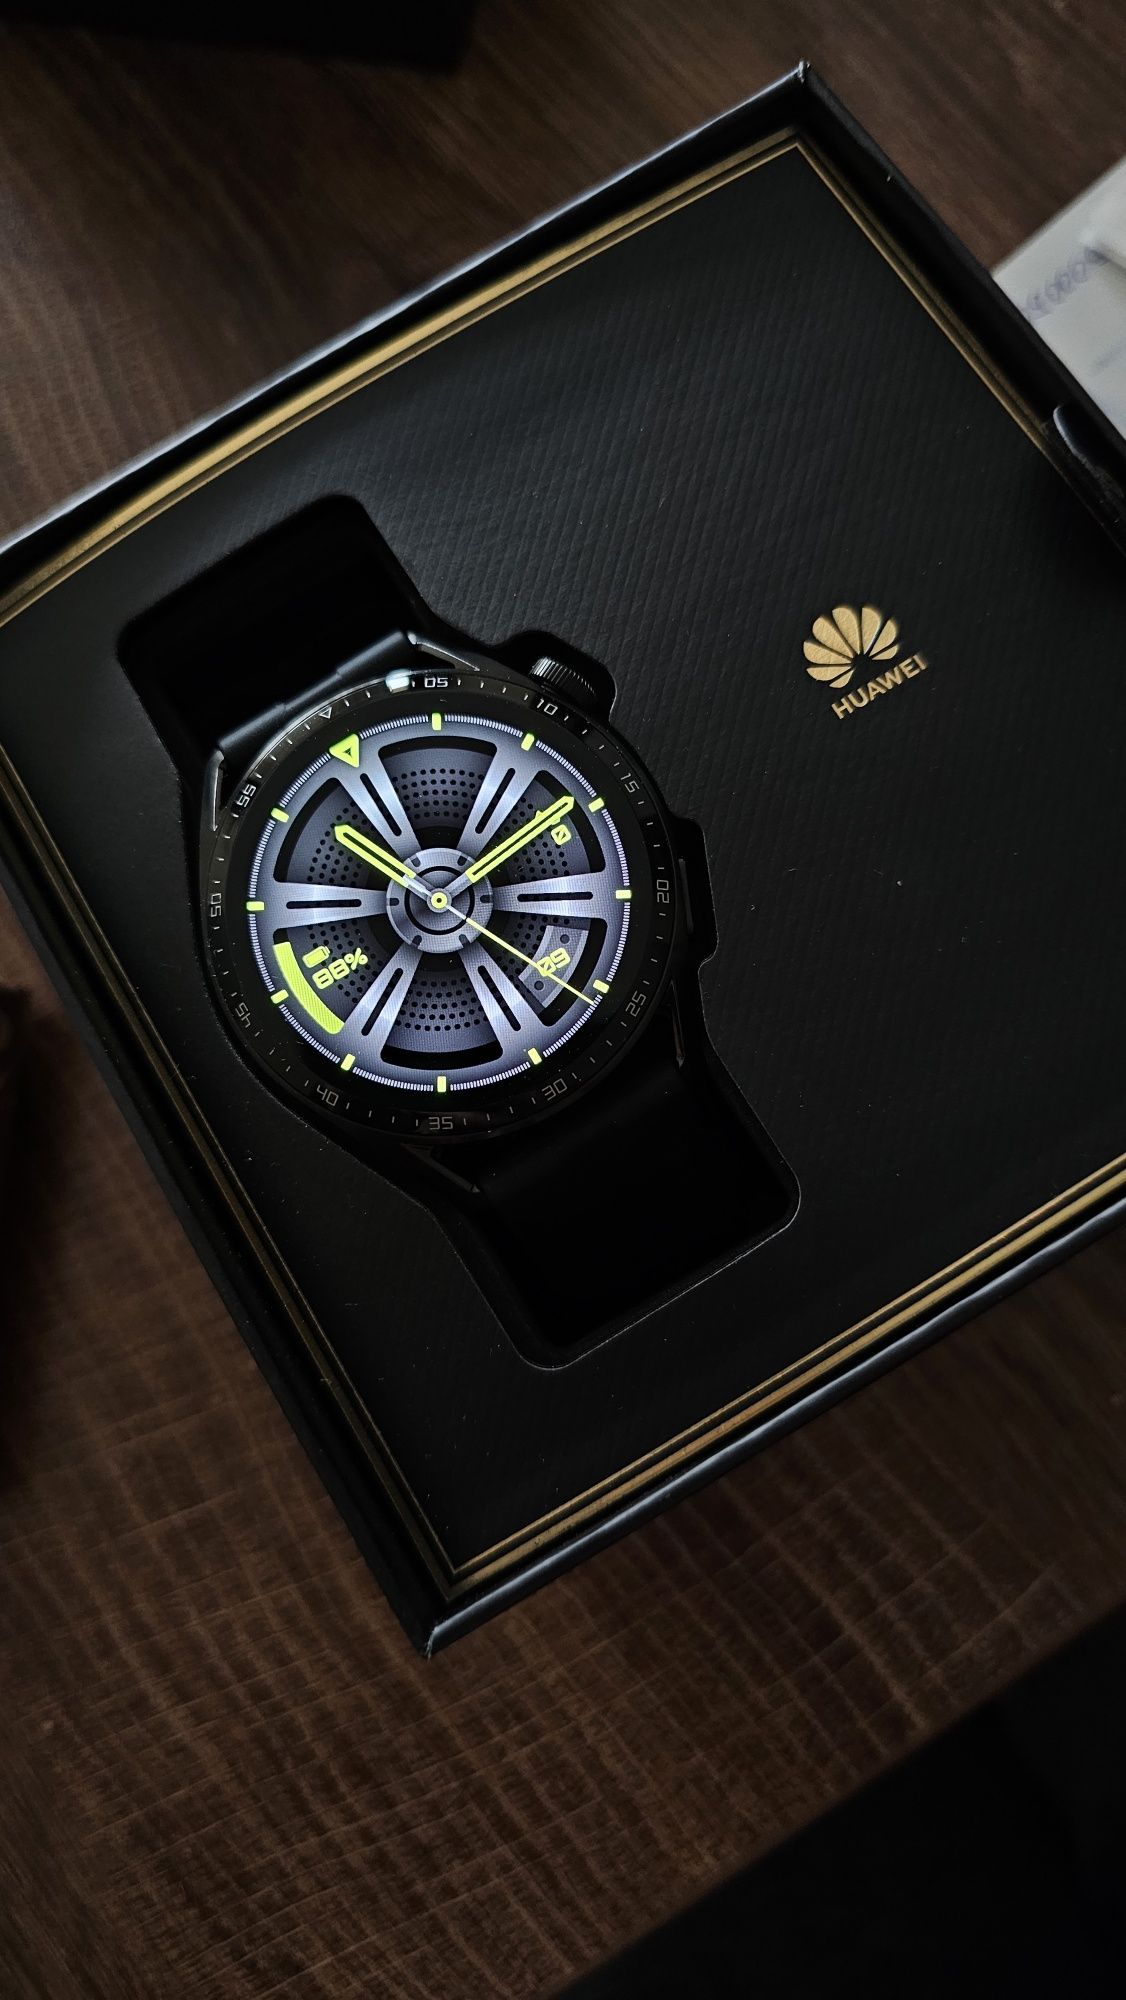 HUAWEI-WATCH GT-3 Смарт  часовник в  Гаранция